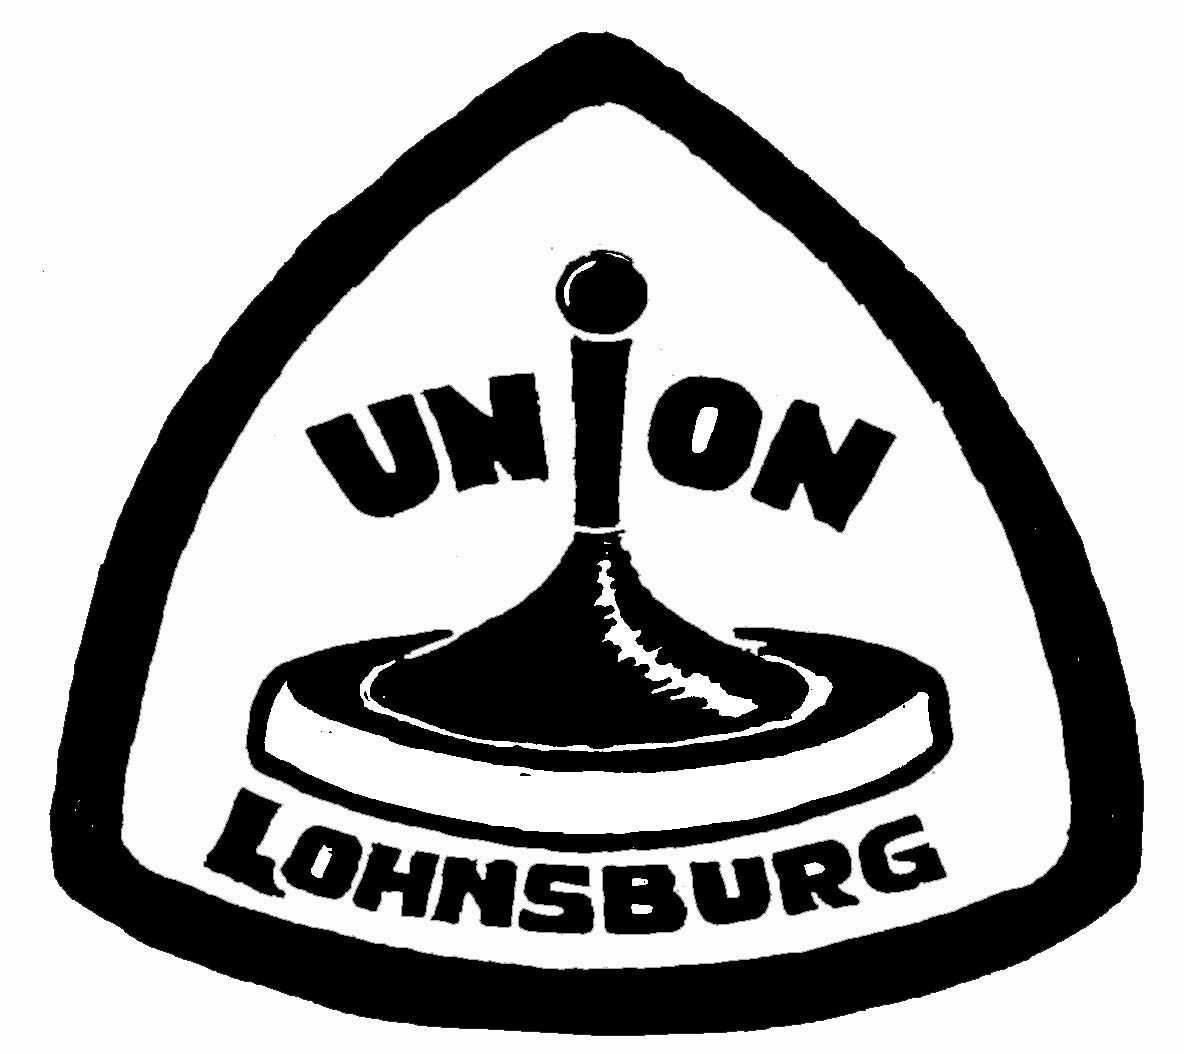 SU Stockschützen Lohnsburg a. K.